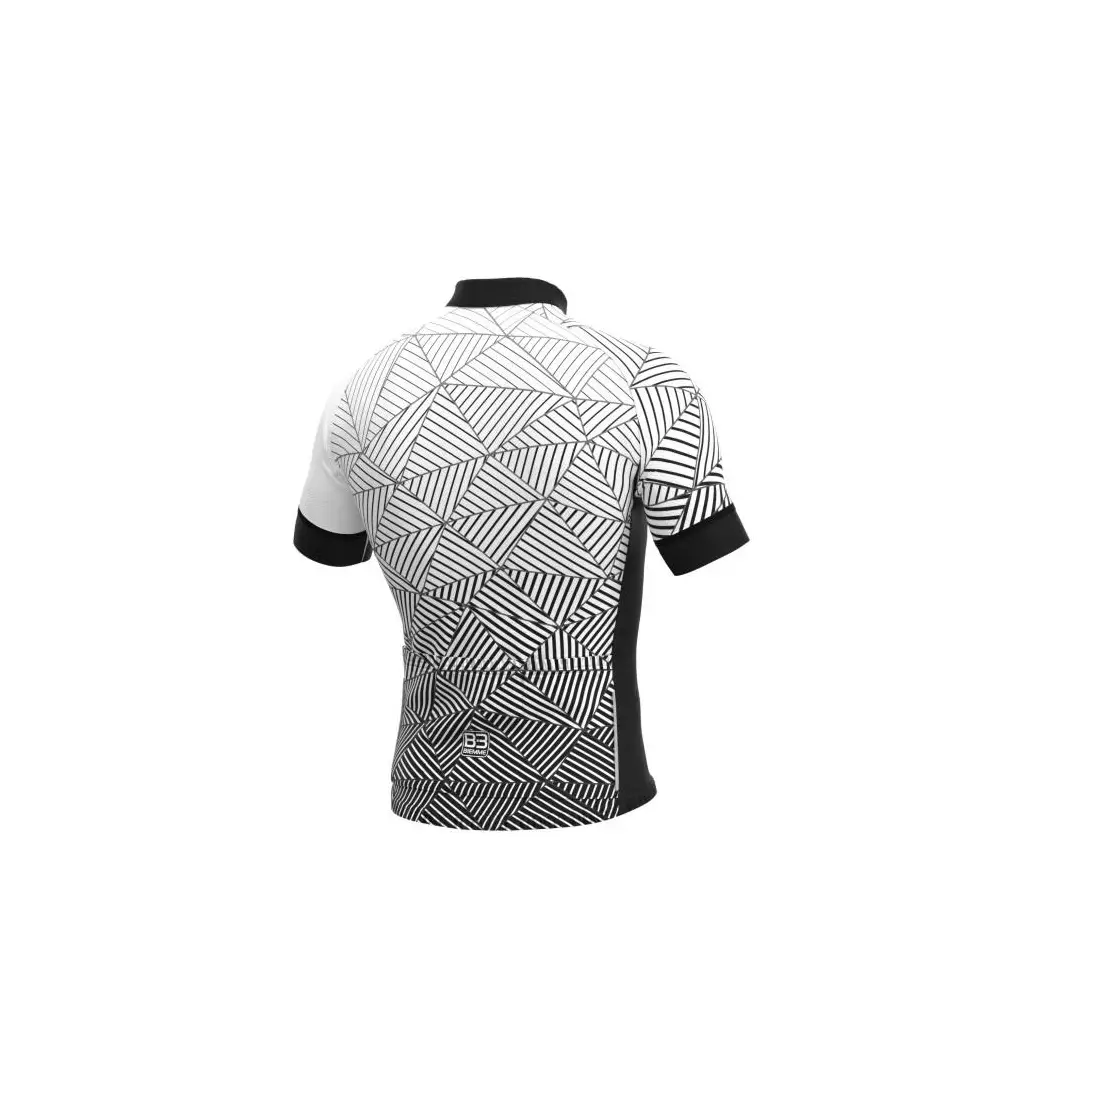 BIEMME tricou de ciclism masculin ANGLIRU black white